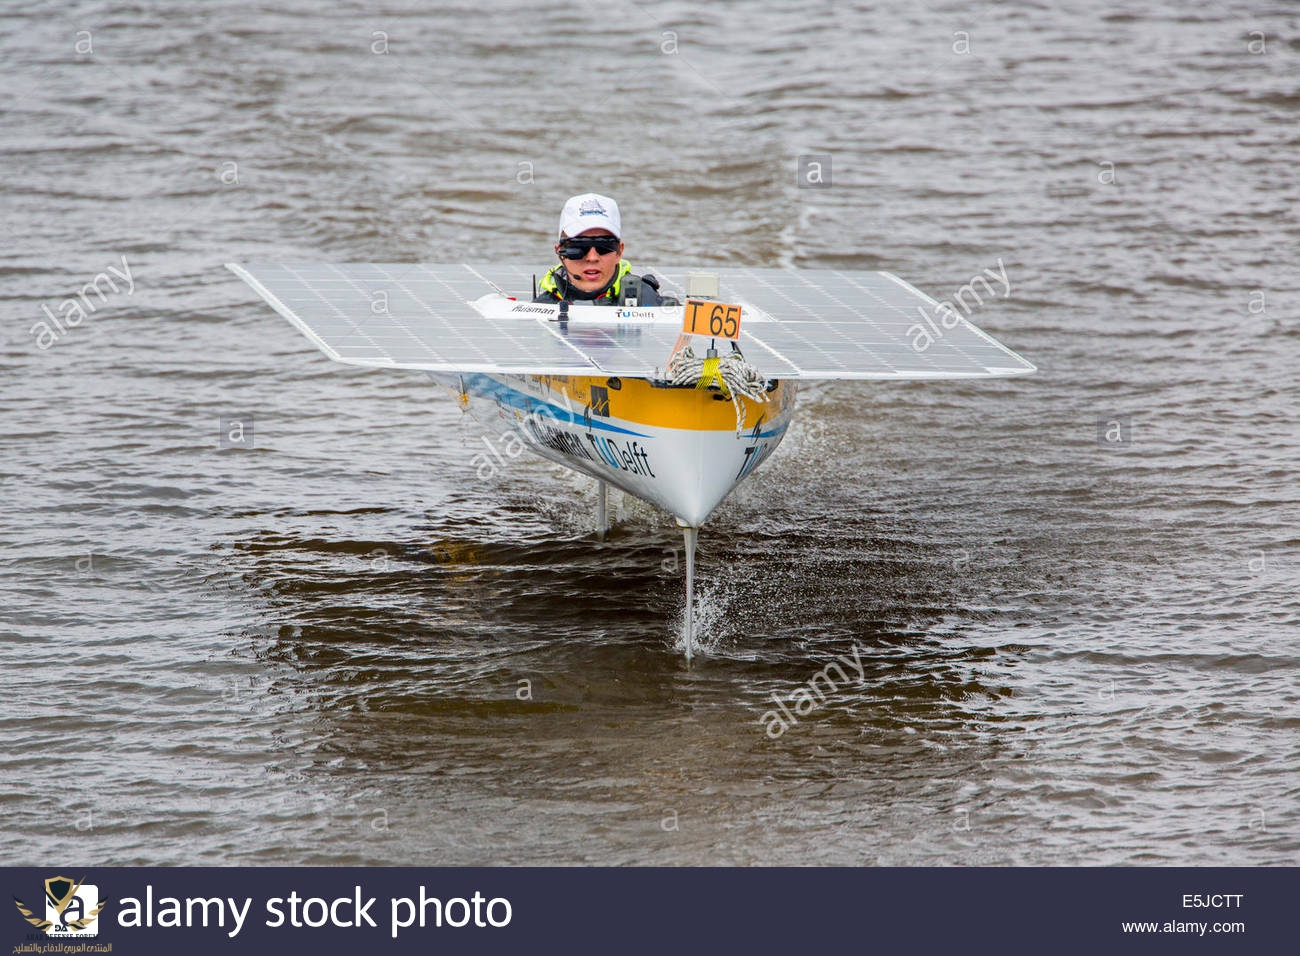 netherlands-franeker-dong-solar-challenge-2014-race-for-solar-boats-E5JCTT.jpg